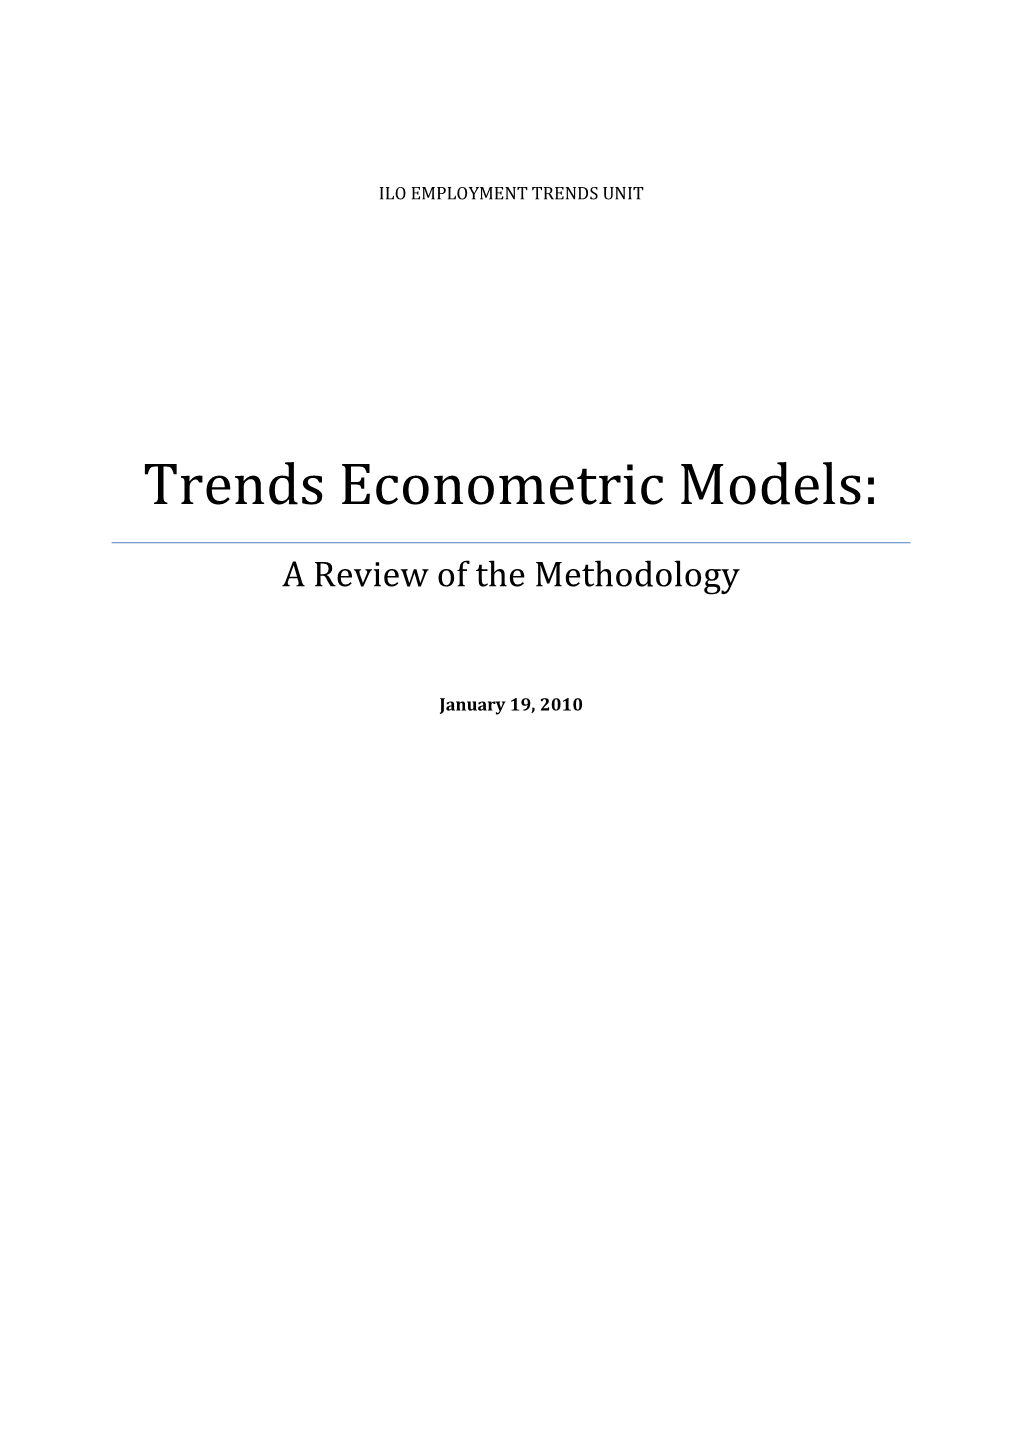 Trends Econometric Models